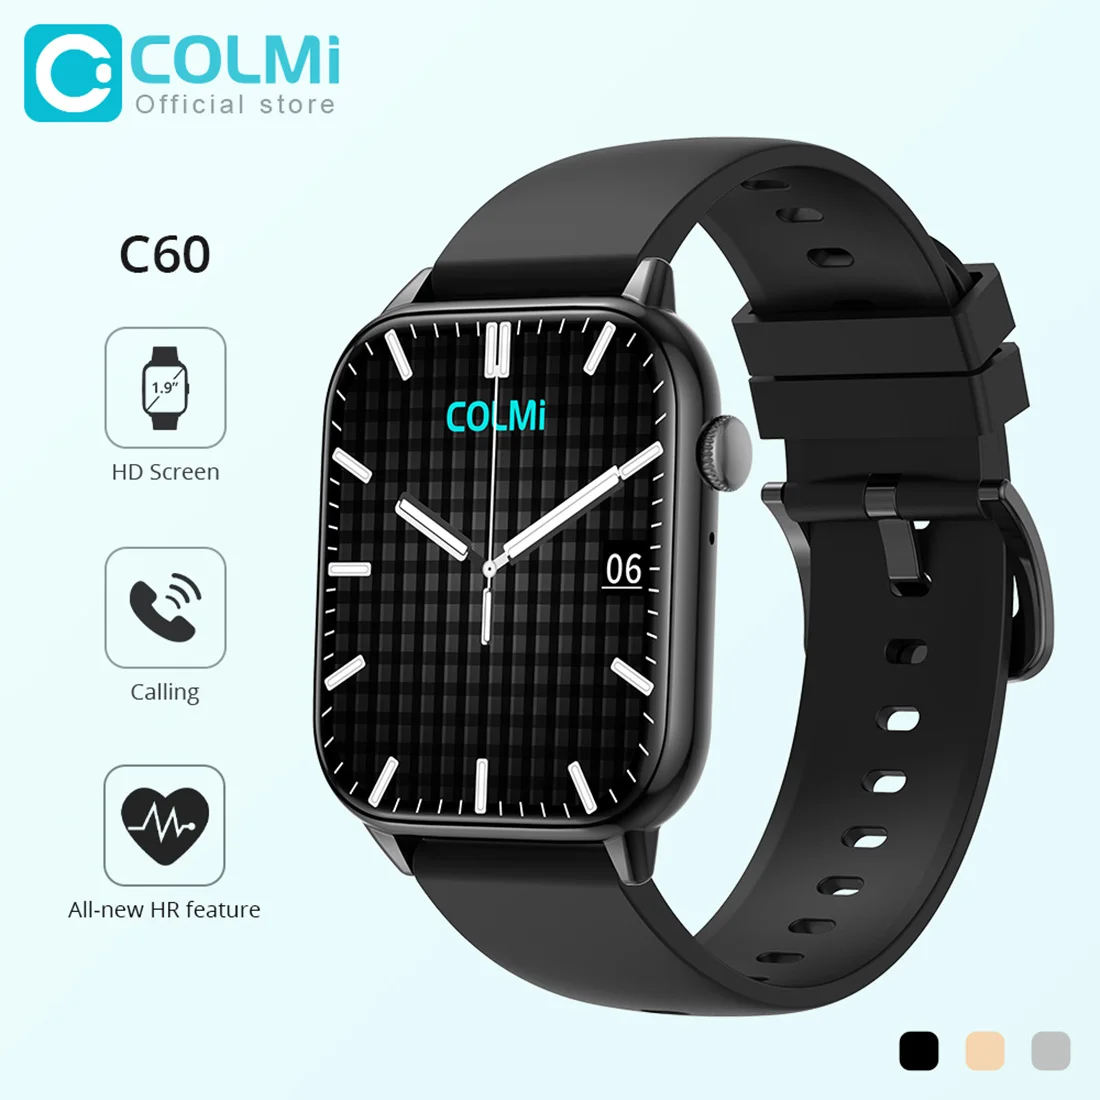 

COLMI C60 Smart Watch 1.9 inch Full Screen Bluetooth Calling Heart Rate Sleep Monitor 19 Sport Models Smartwatch For Men Women